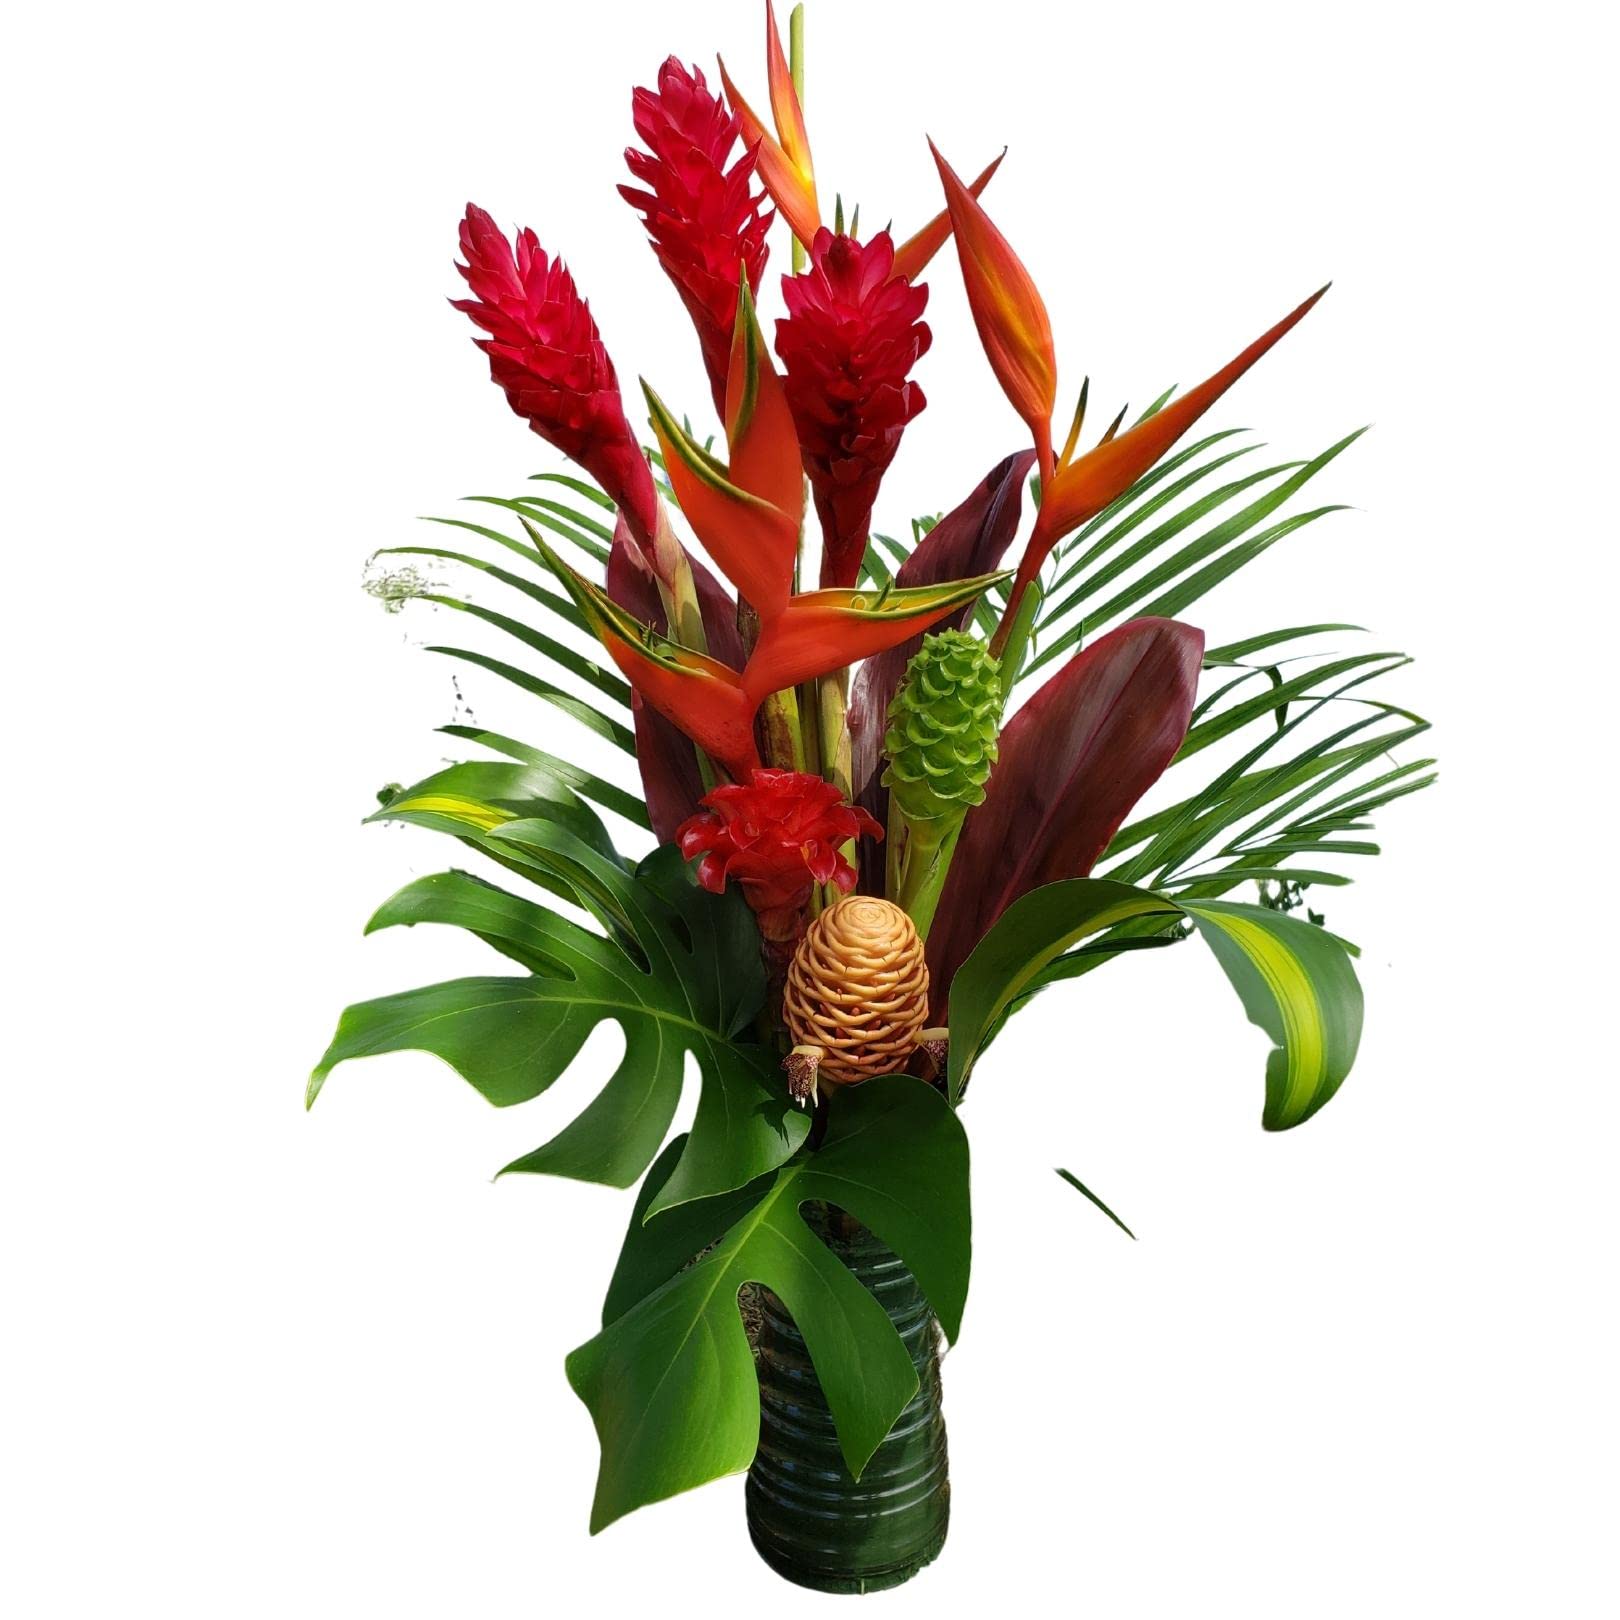 A bouquet of Hawaiian flowers